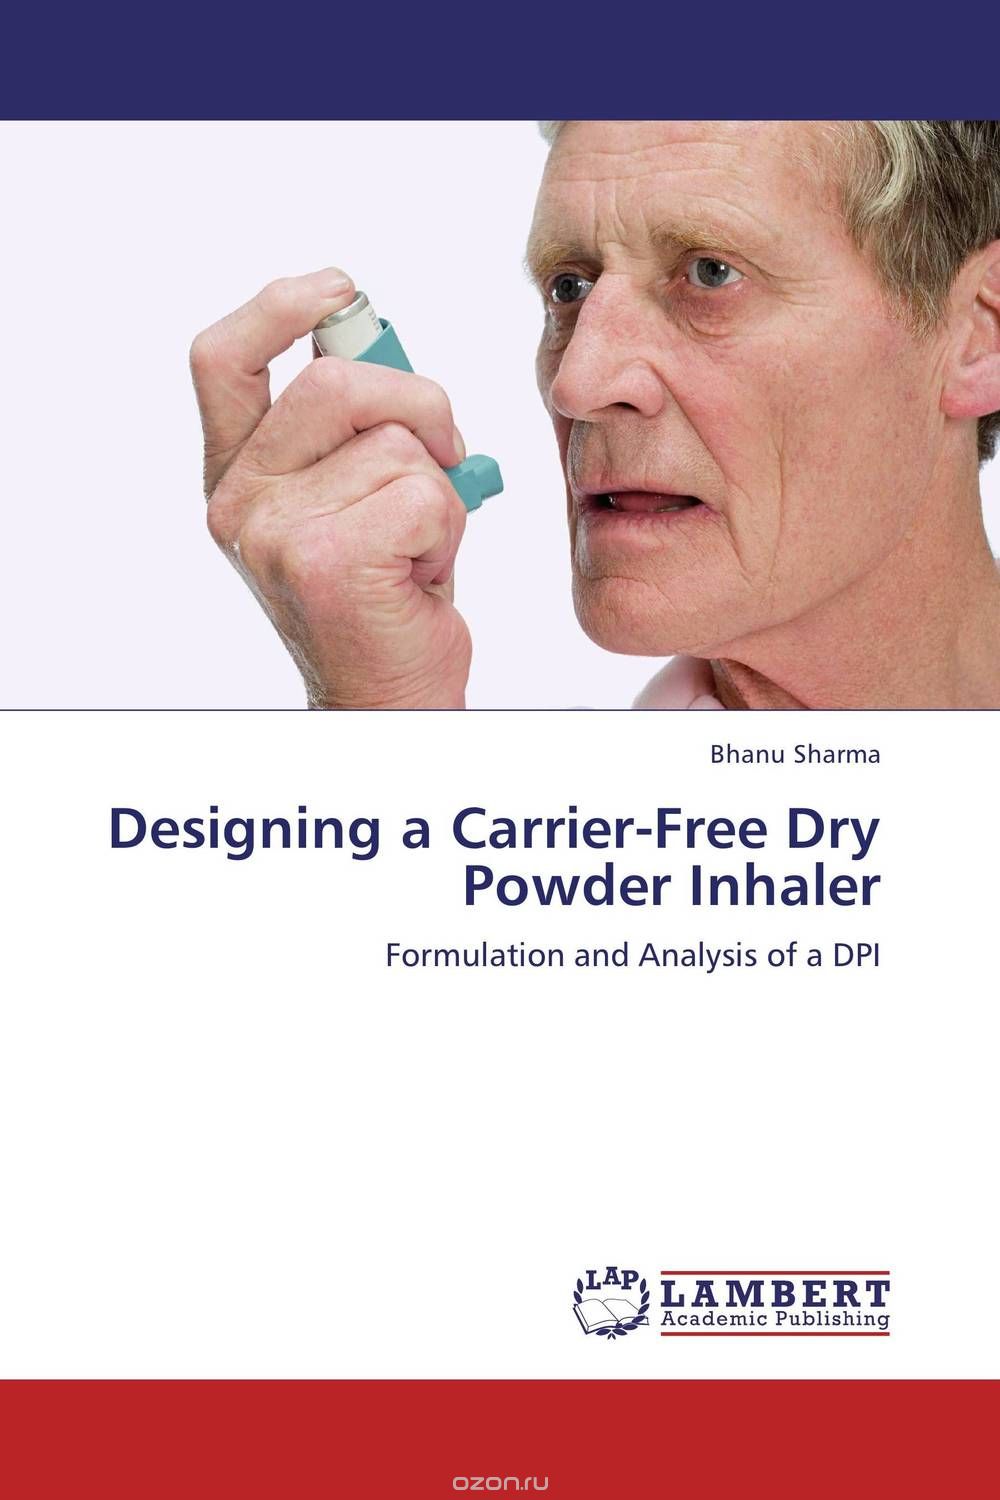 Designing a Carrier-Free Dry Powder Inhaler